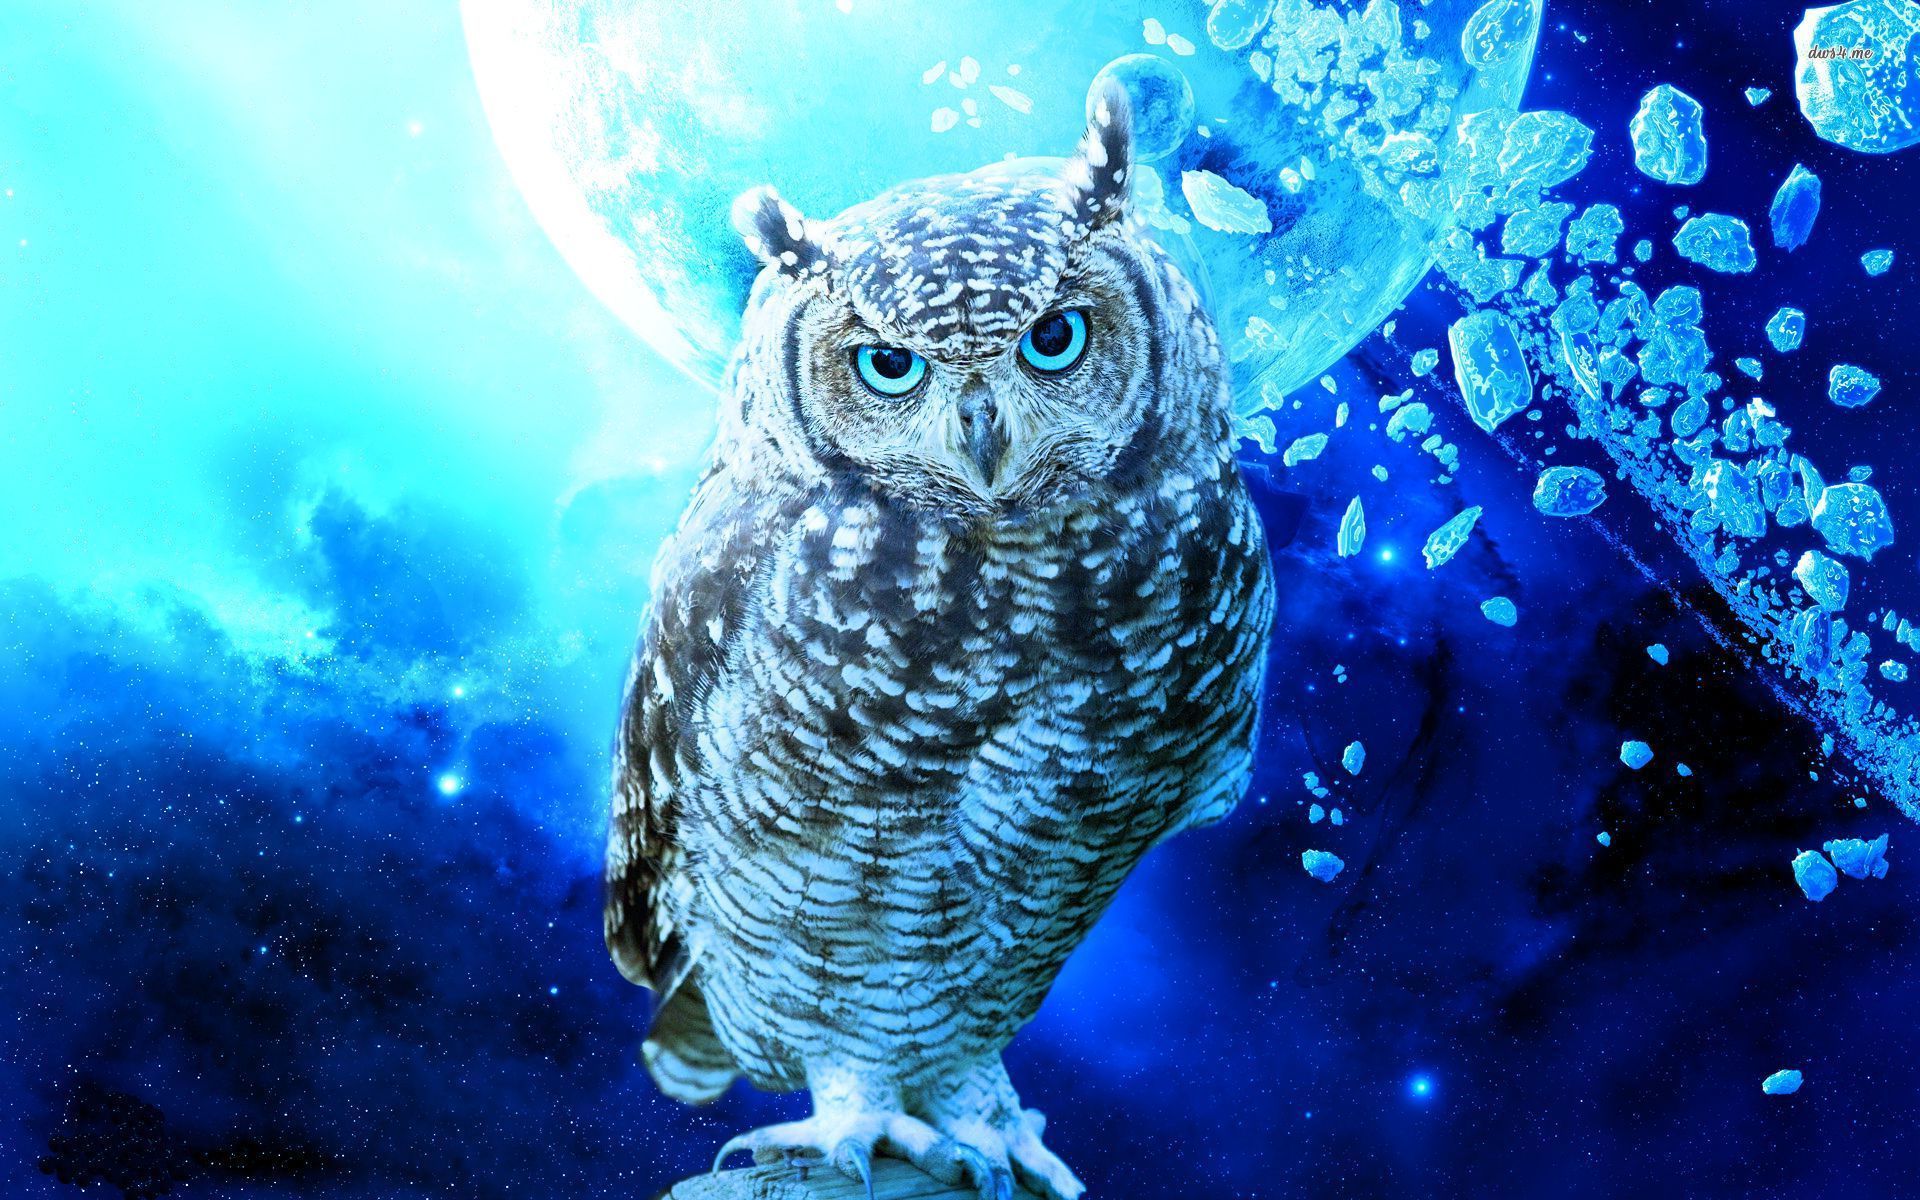 Owl Art Background Wallpaper 21119